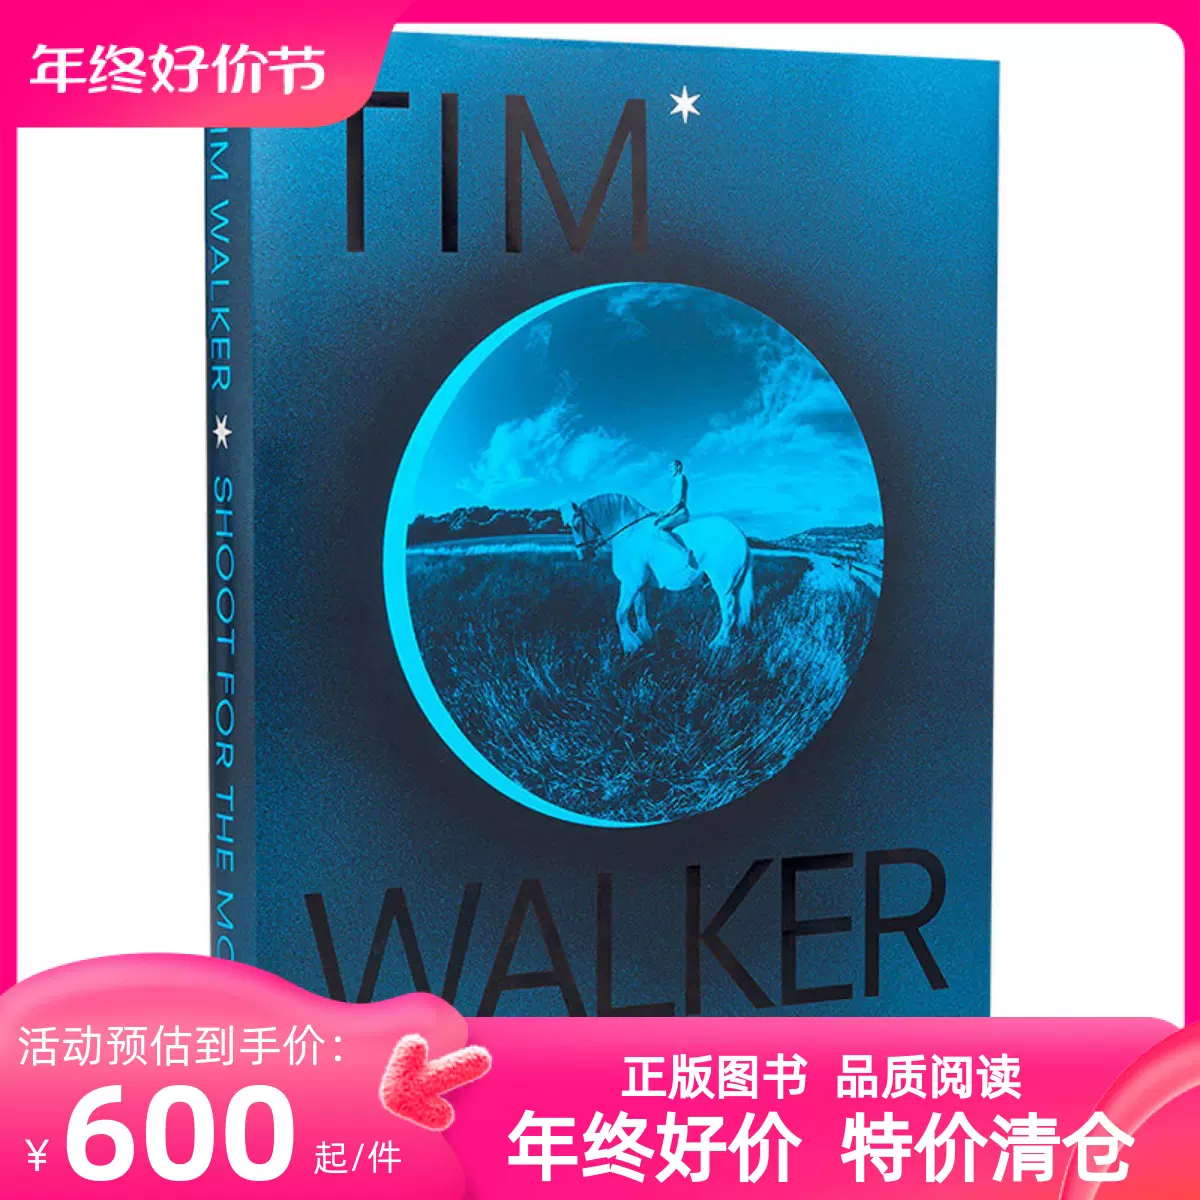 Tim Walker摄影作品集Shoot for the Moon为月亮而摄英文原版-Taobao